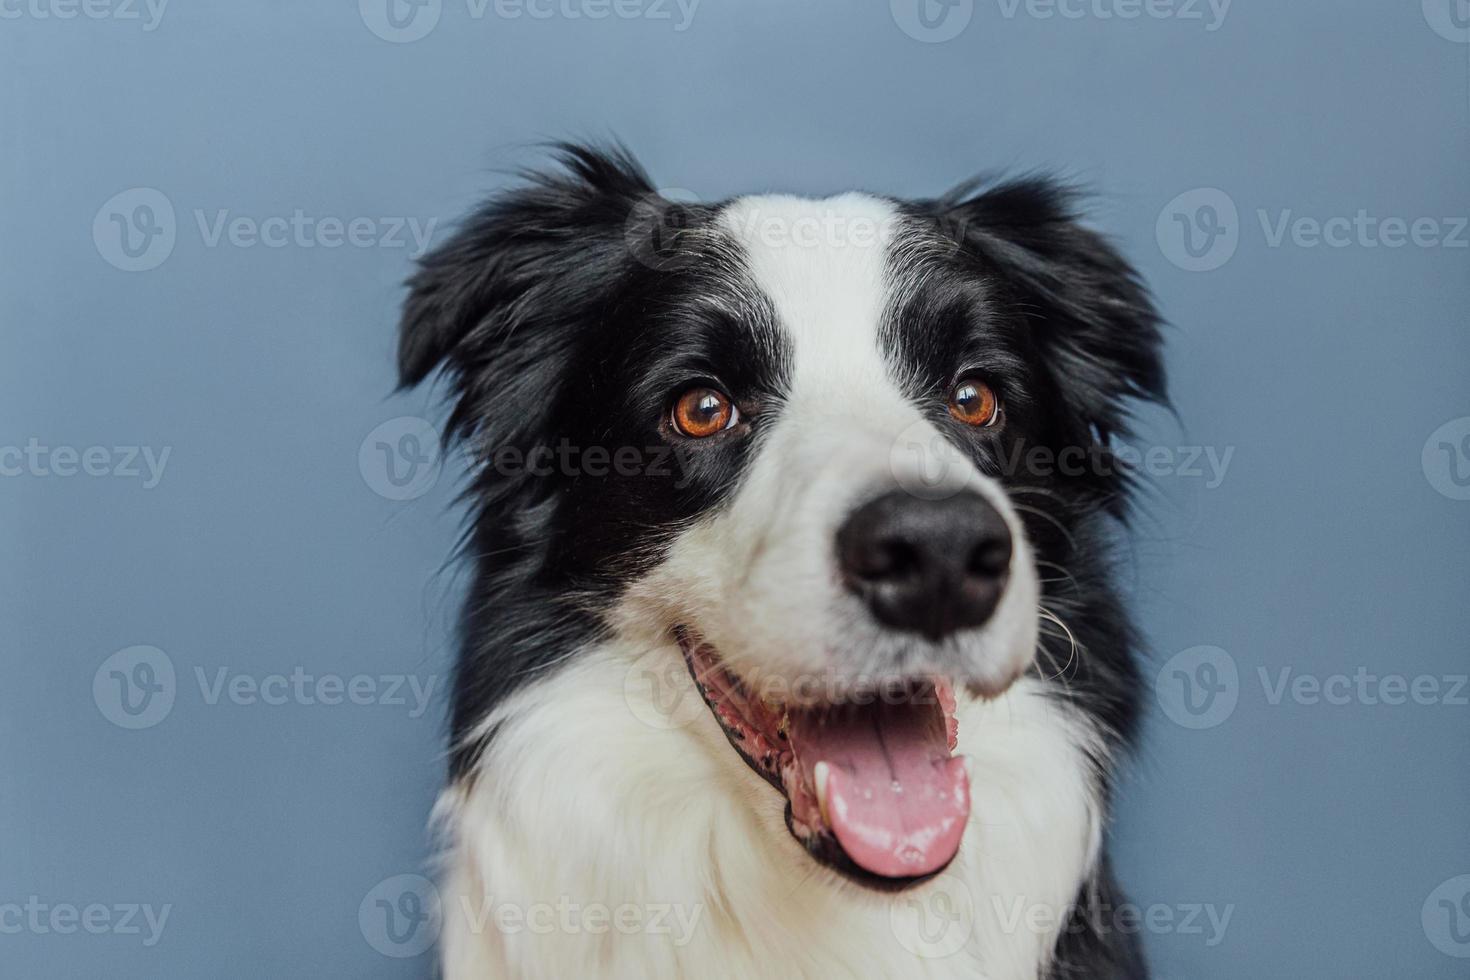 schattige puppy hondje border collie met grappige gezicht geïsoleerd op grijs blauwe achtergrond. schattige hond. gezelschapsdier leven concept. foto